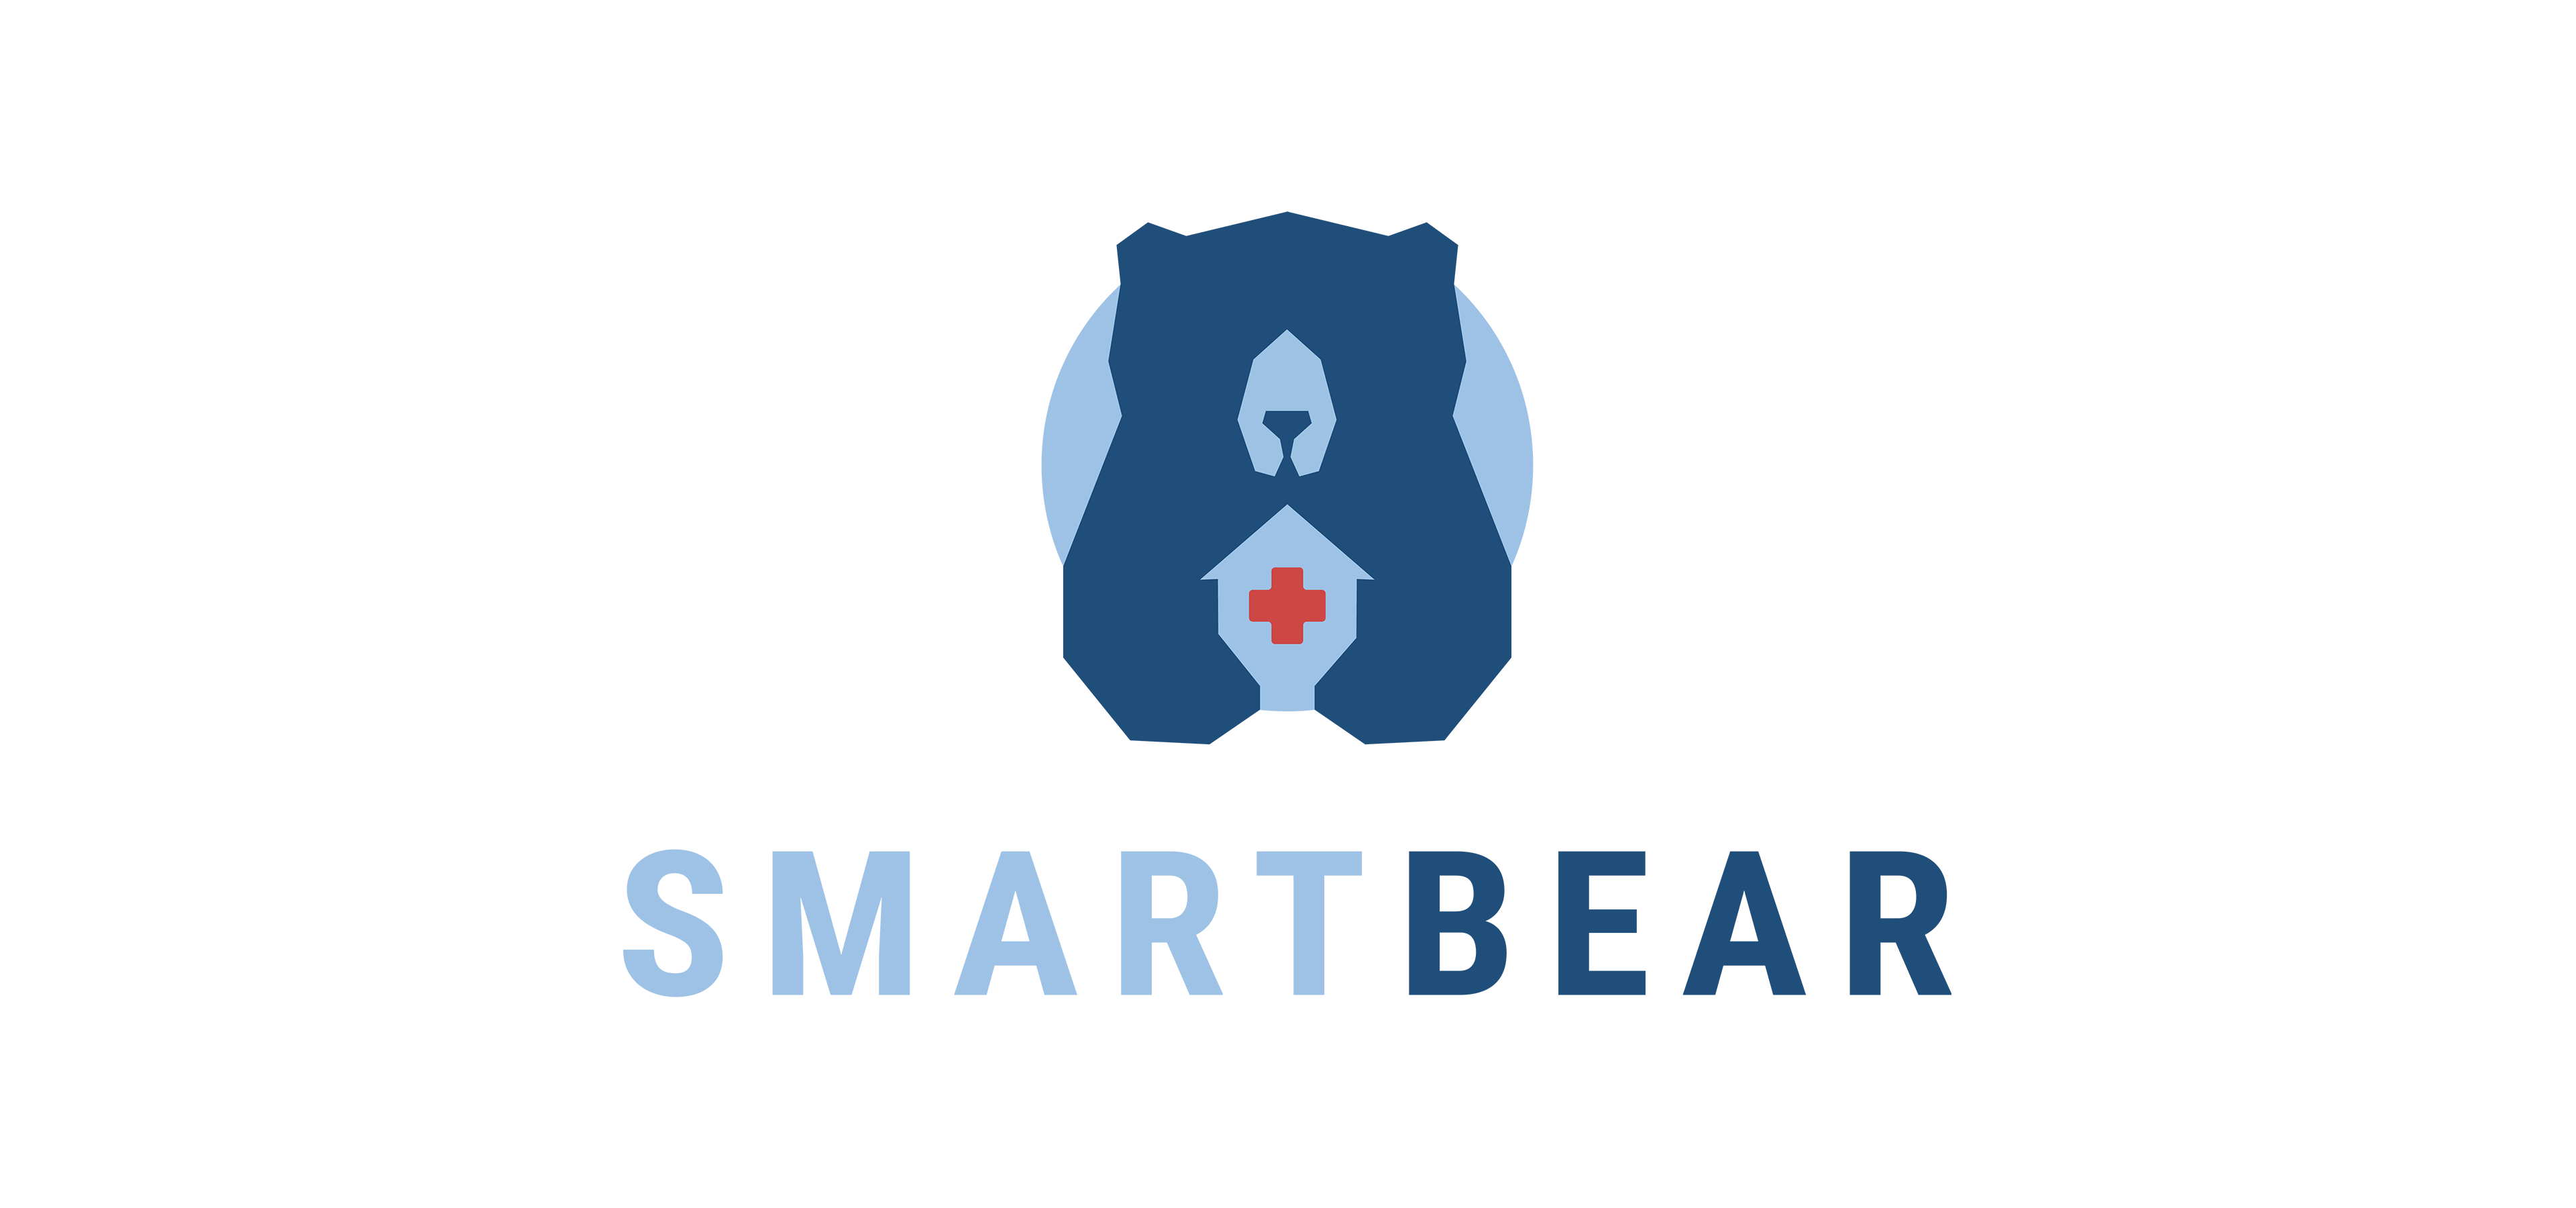 photo for "Smart Bear"